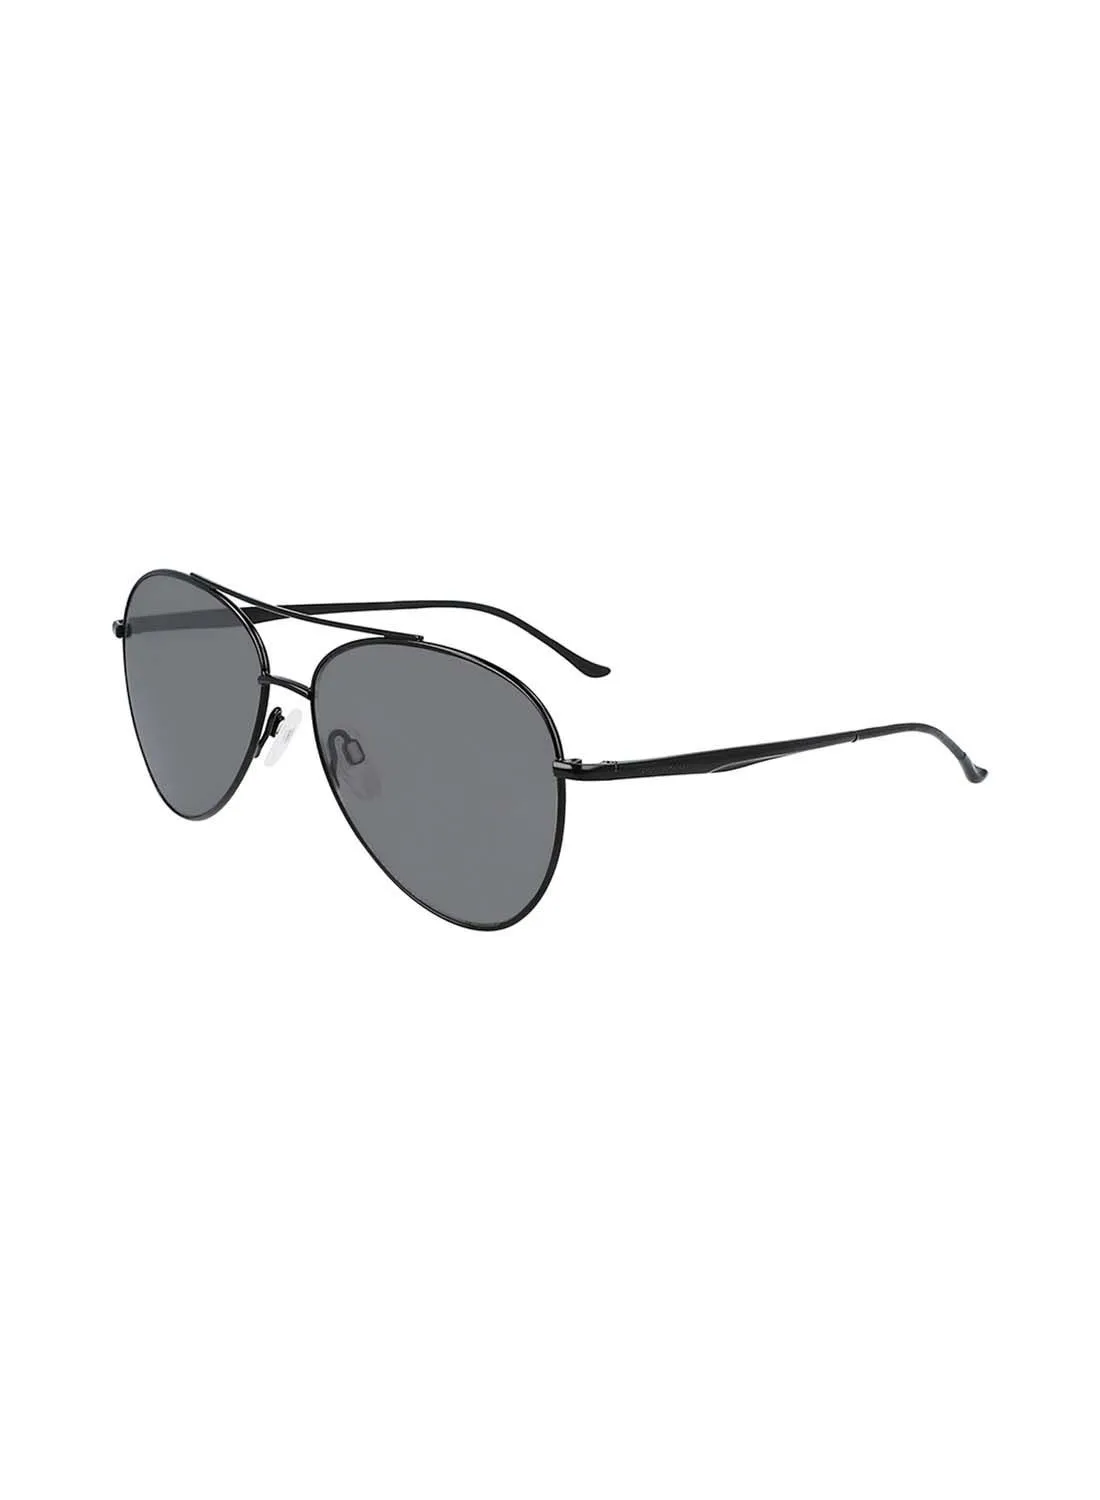 Donna Karan Full Rim Metal Aviator Sunglasses DO102S 5714 (001)